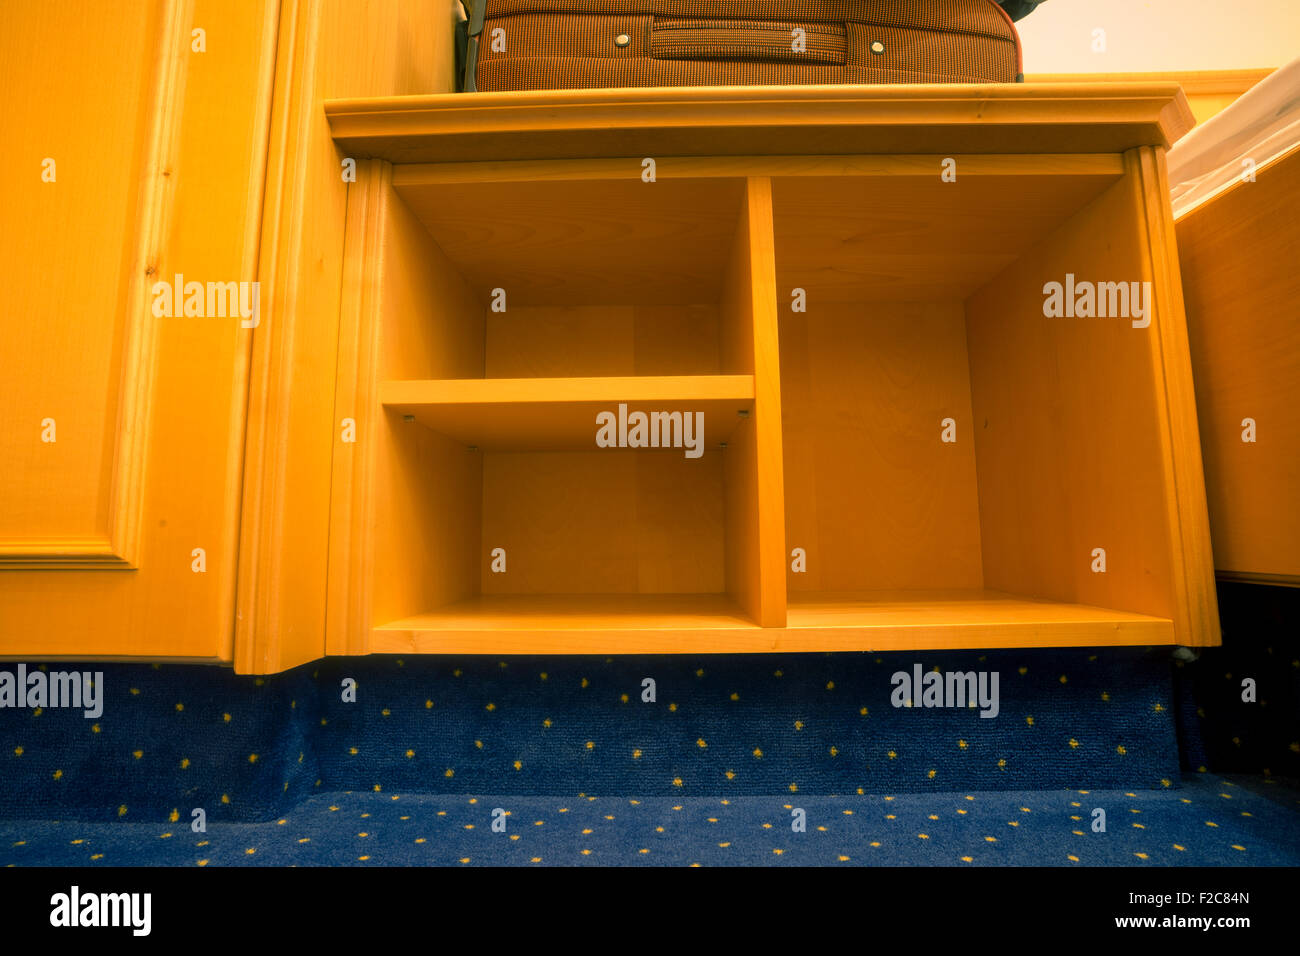 empty open wooden shelf in home interior Stock Photo